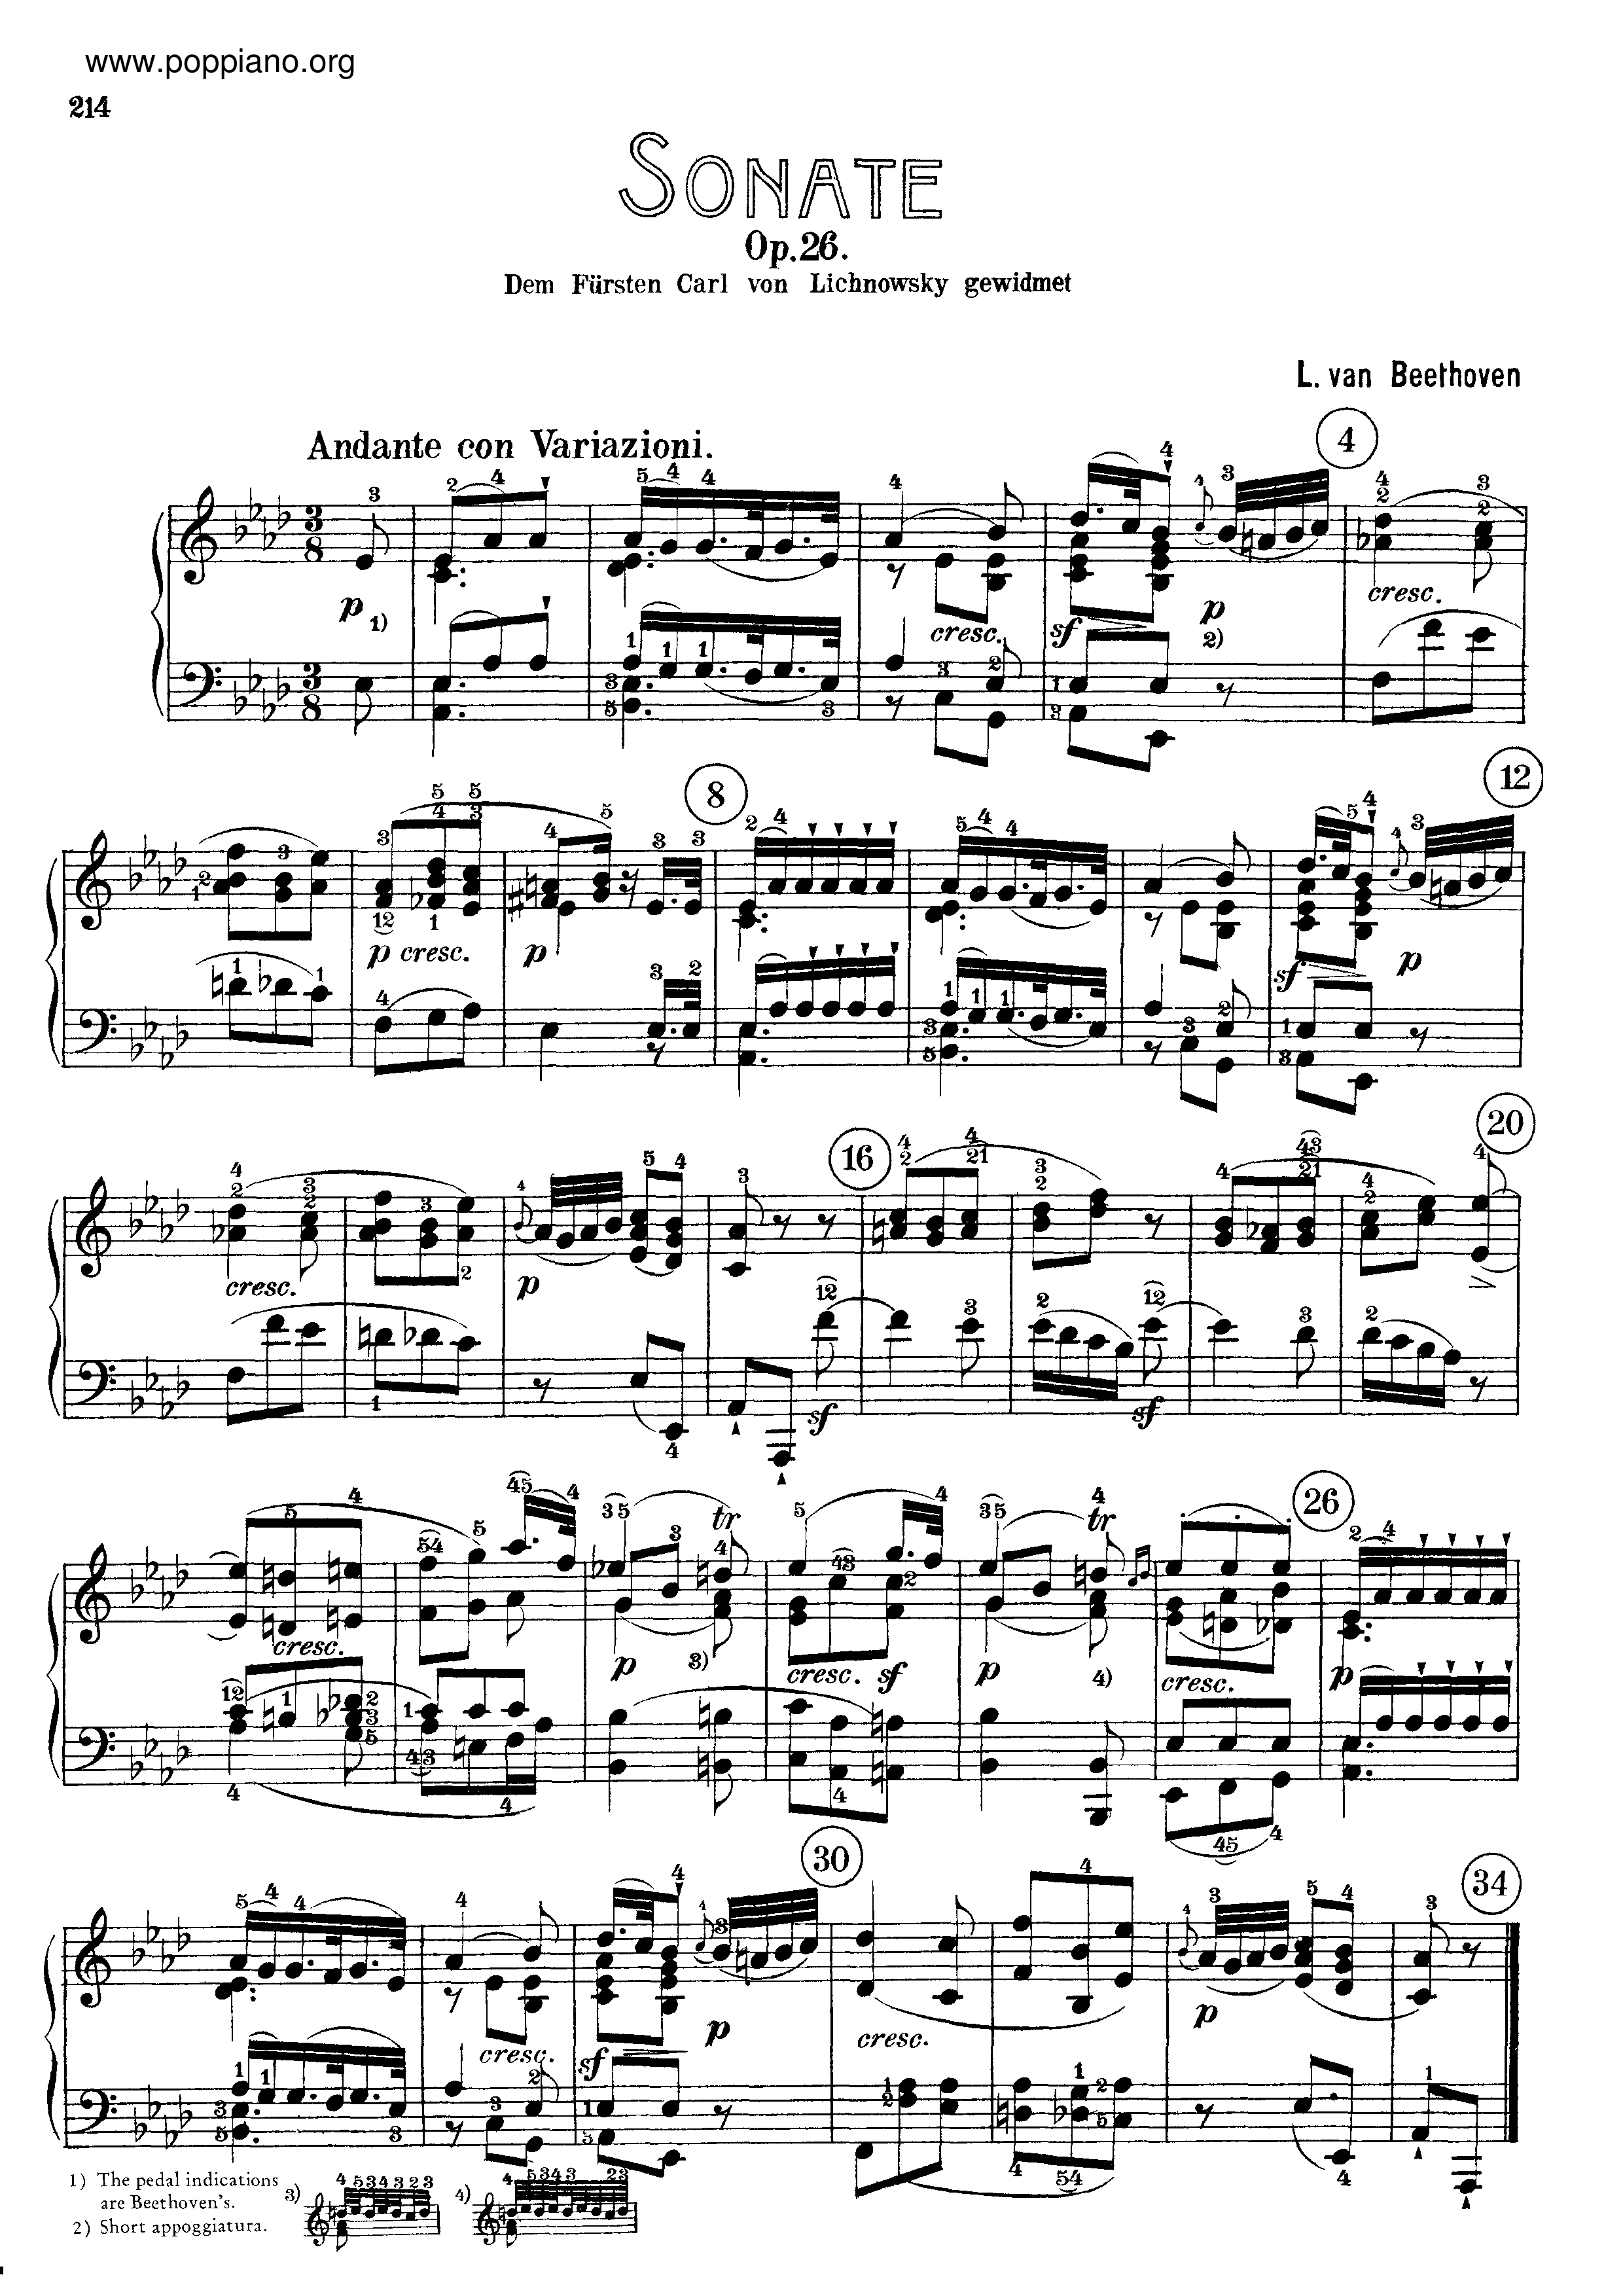 Sonata No. 12 in A-flat major琴譜